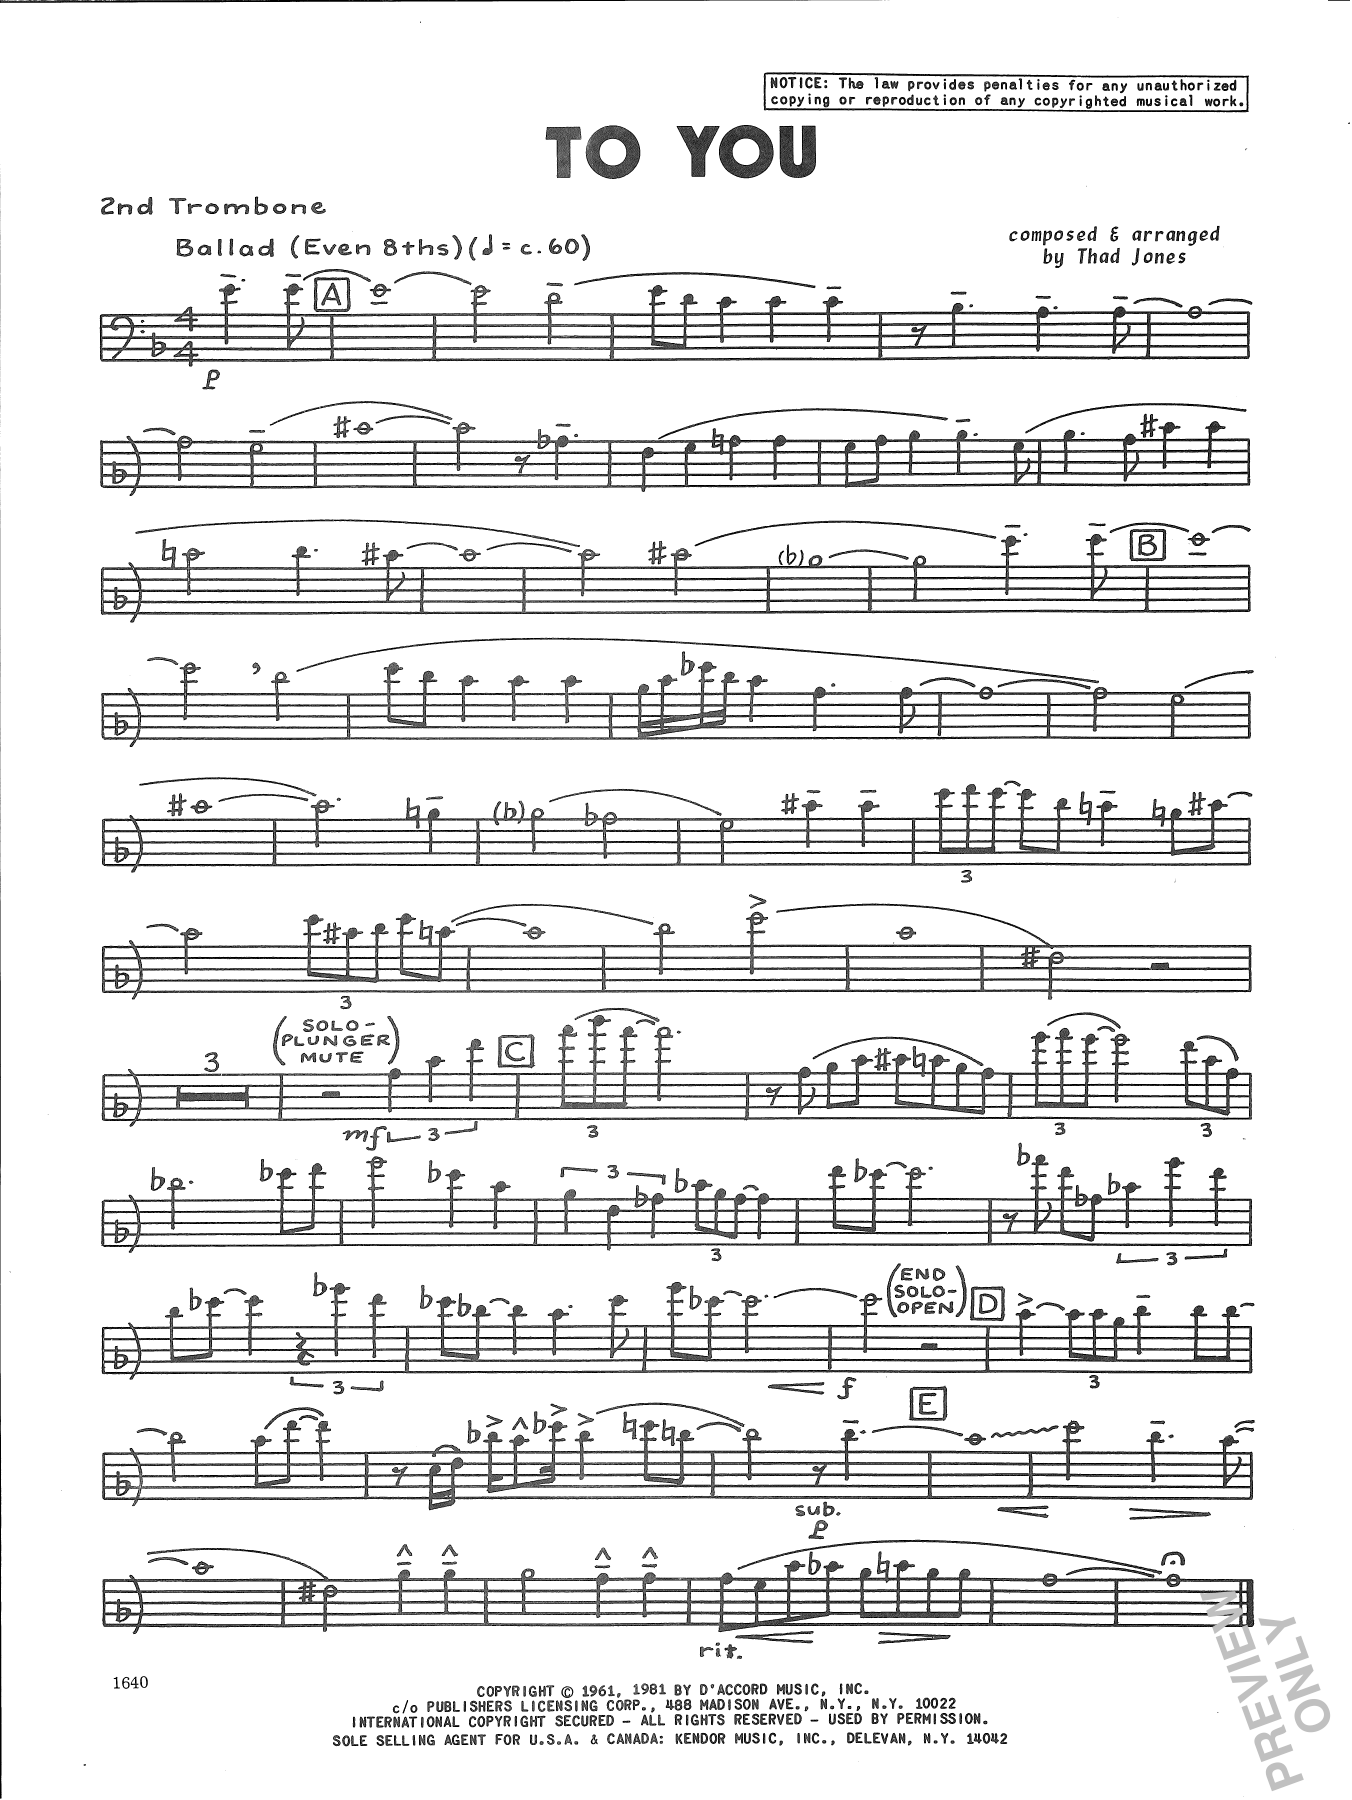 Download Thad Jones To You - 2nd Trombone Sheet Music